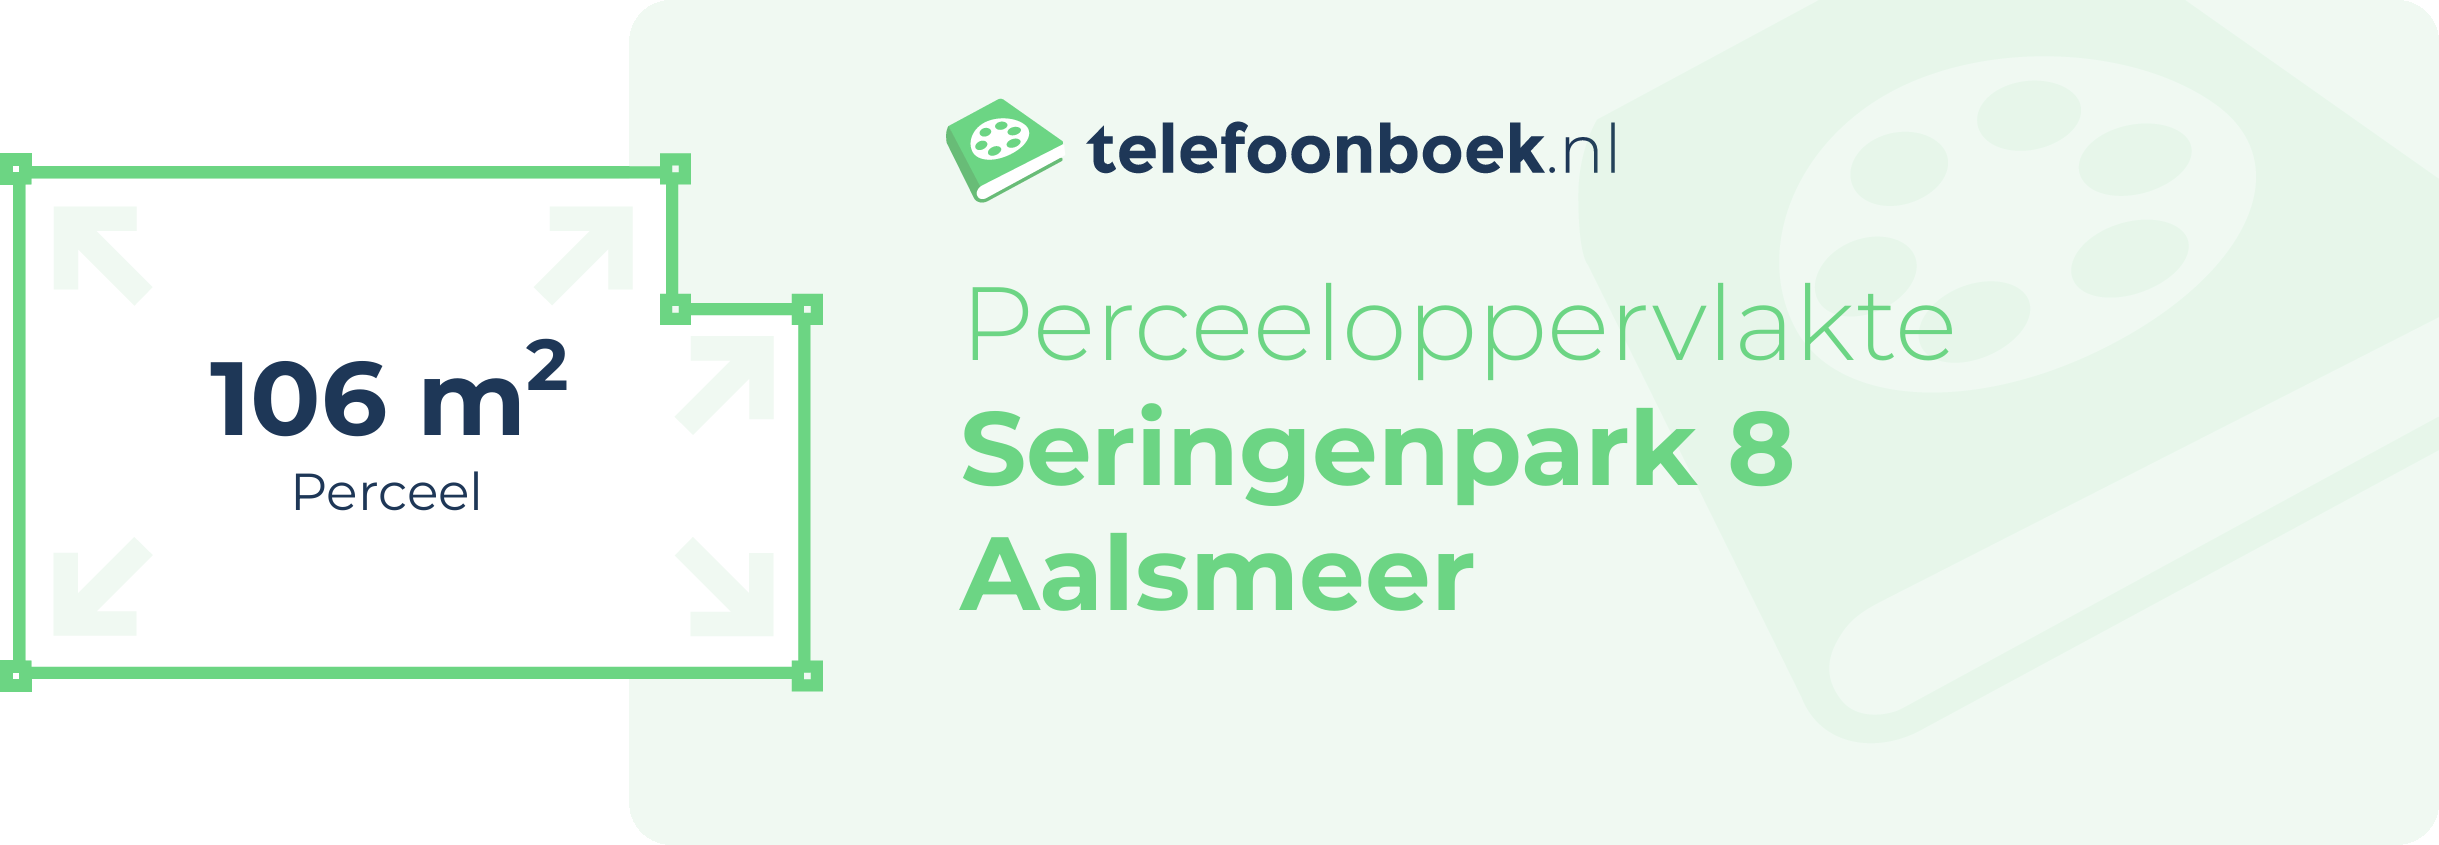 Perceeloppervlakte Seringenpark 8 Aalsmeer